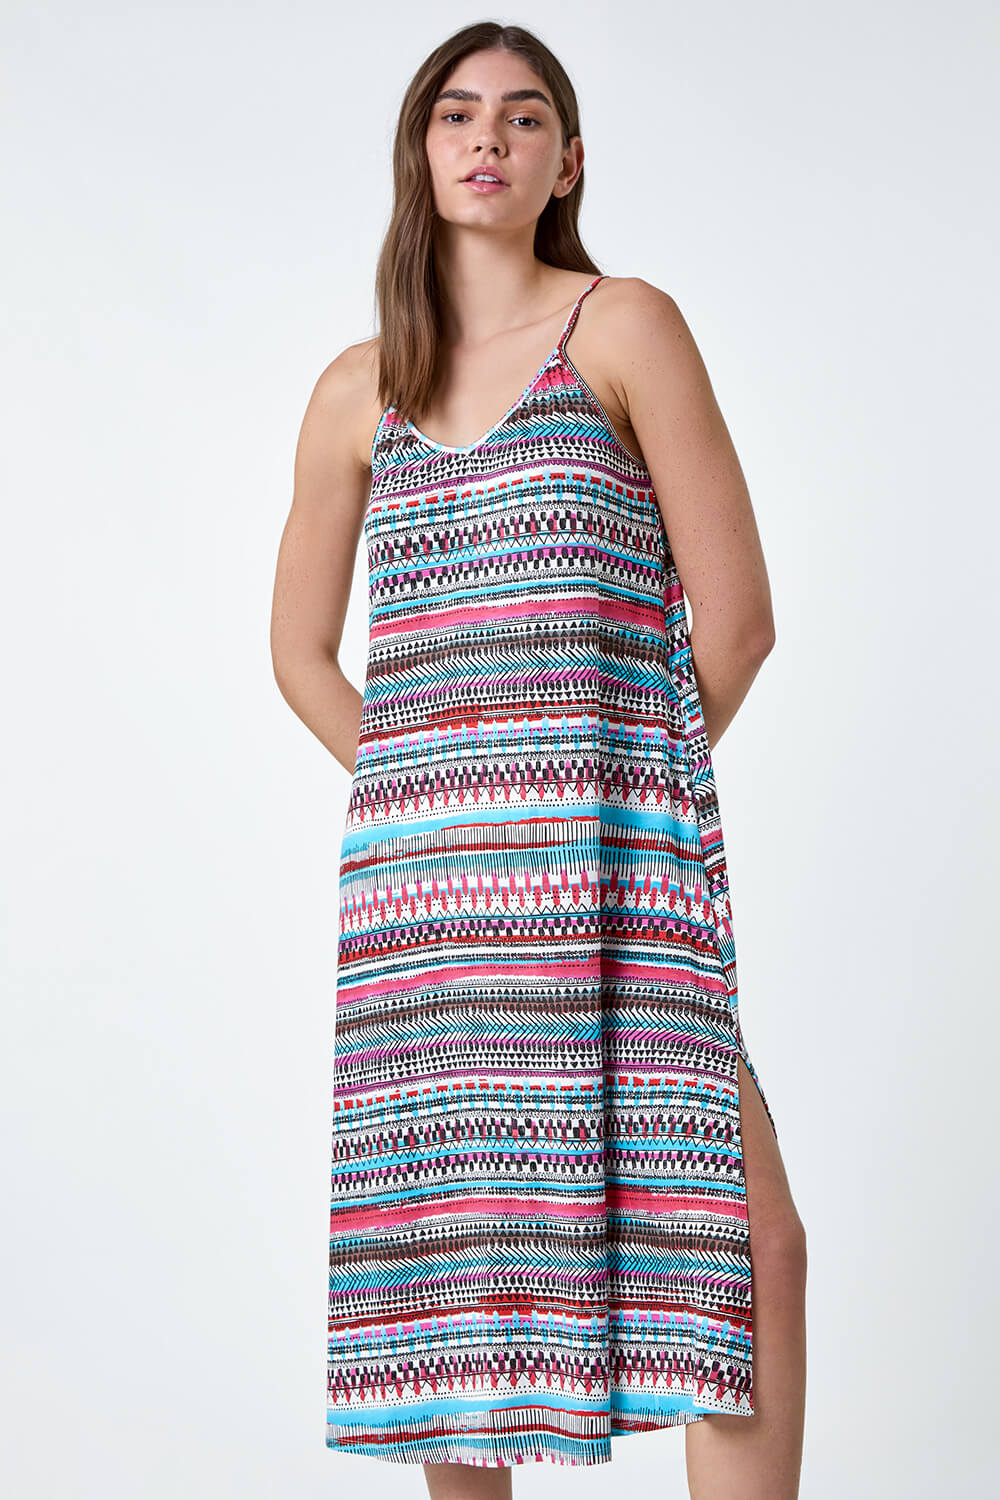 PINK Aztec Stripe Stretch Pocket Midi Dress, Image 2 of 5